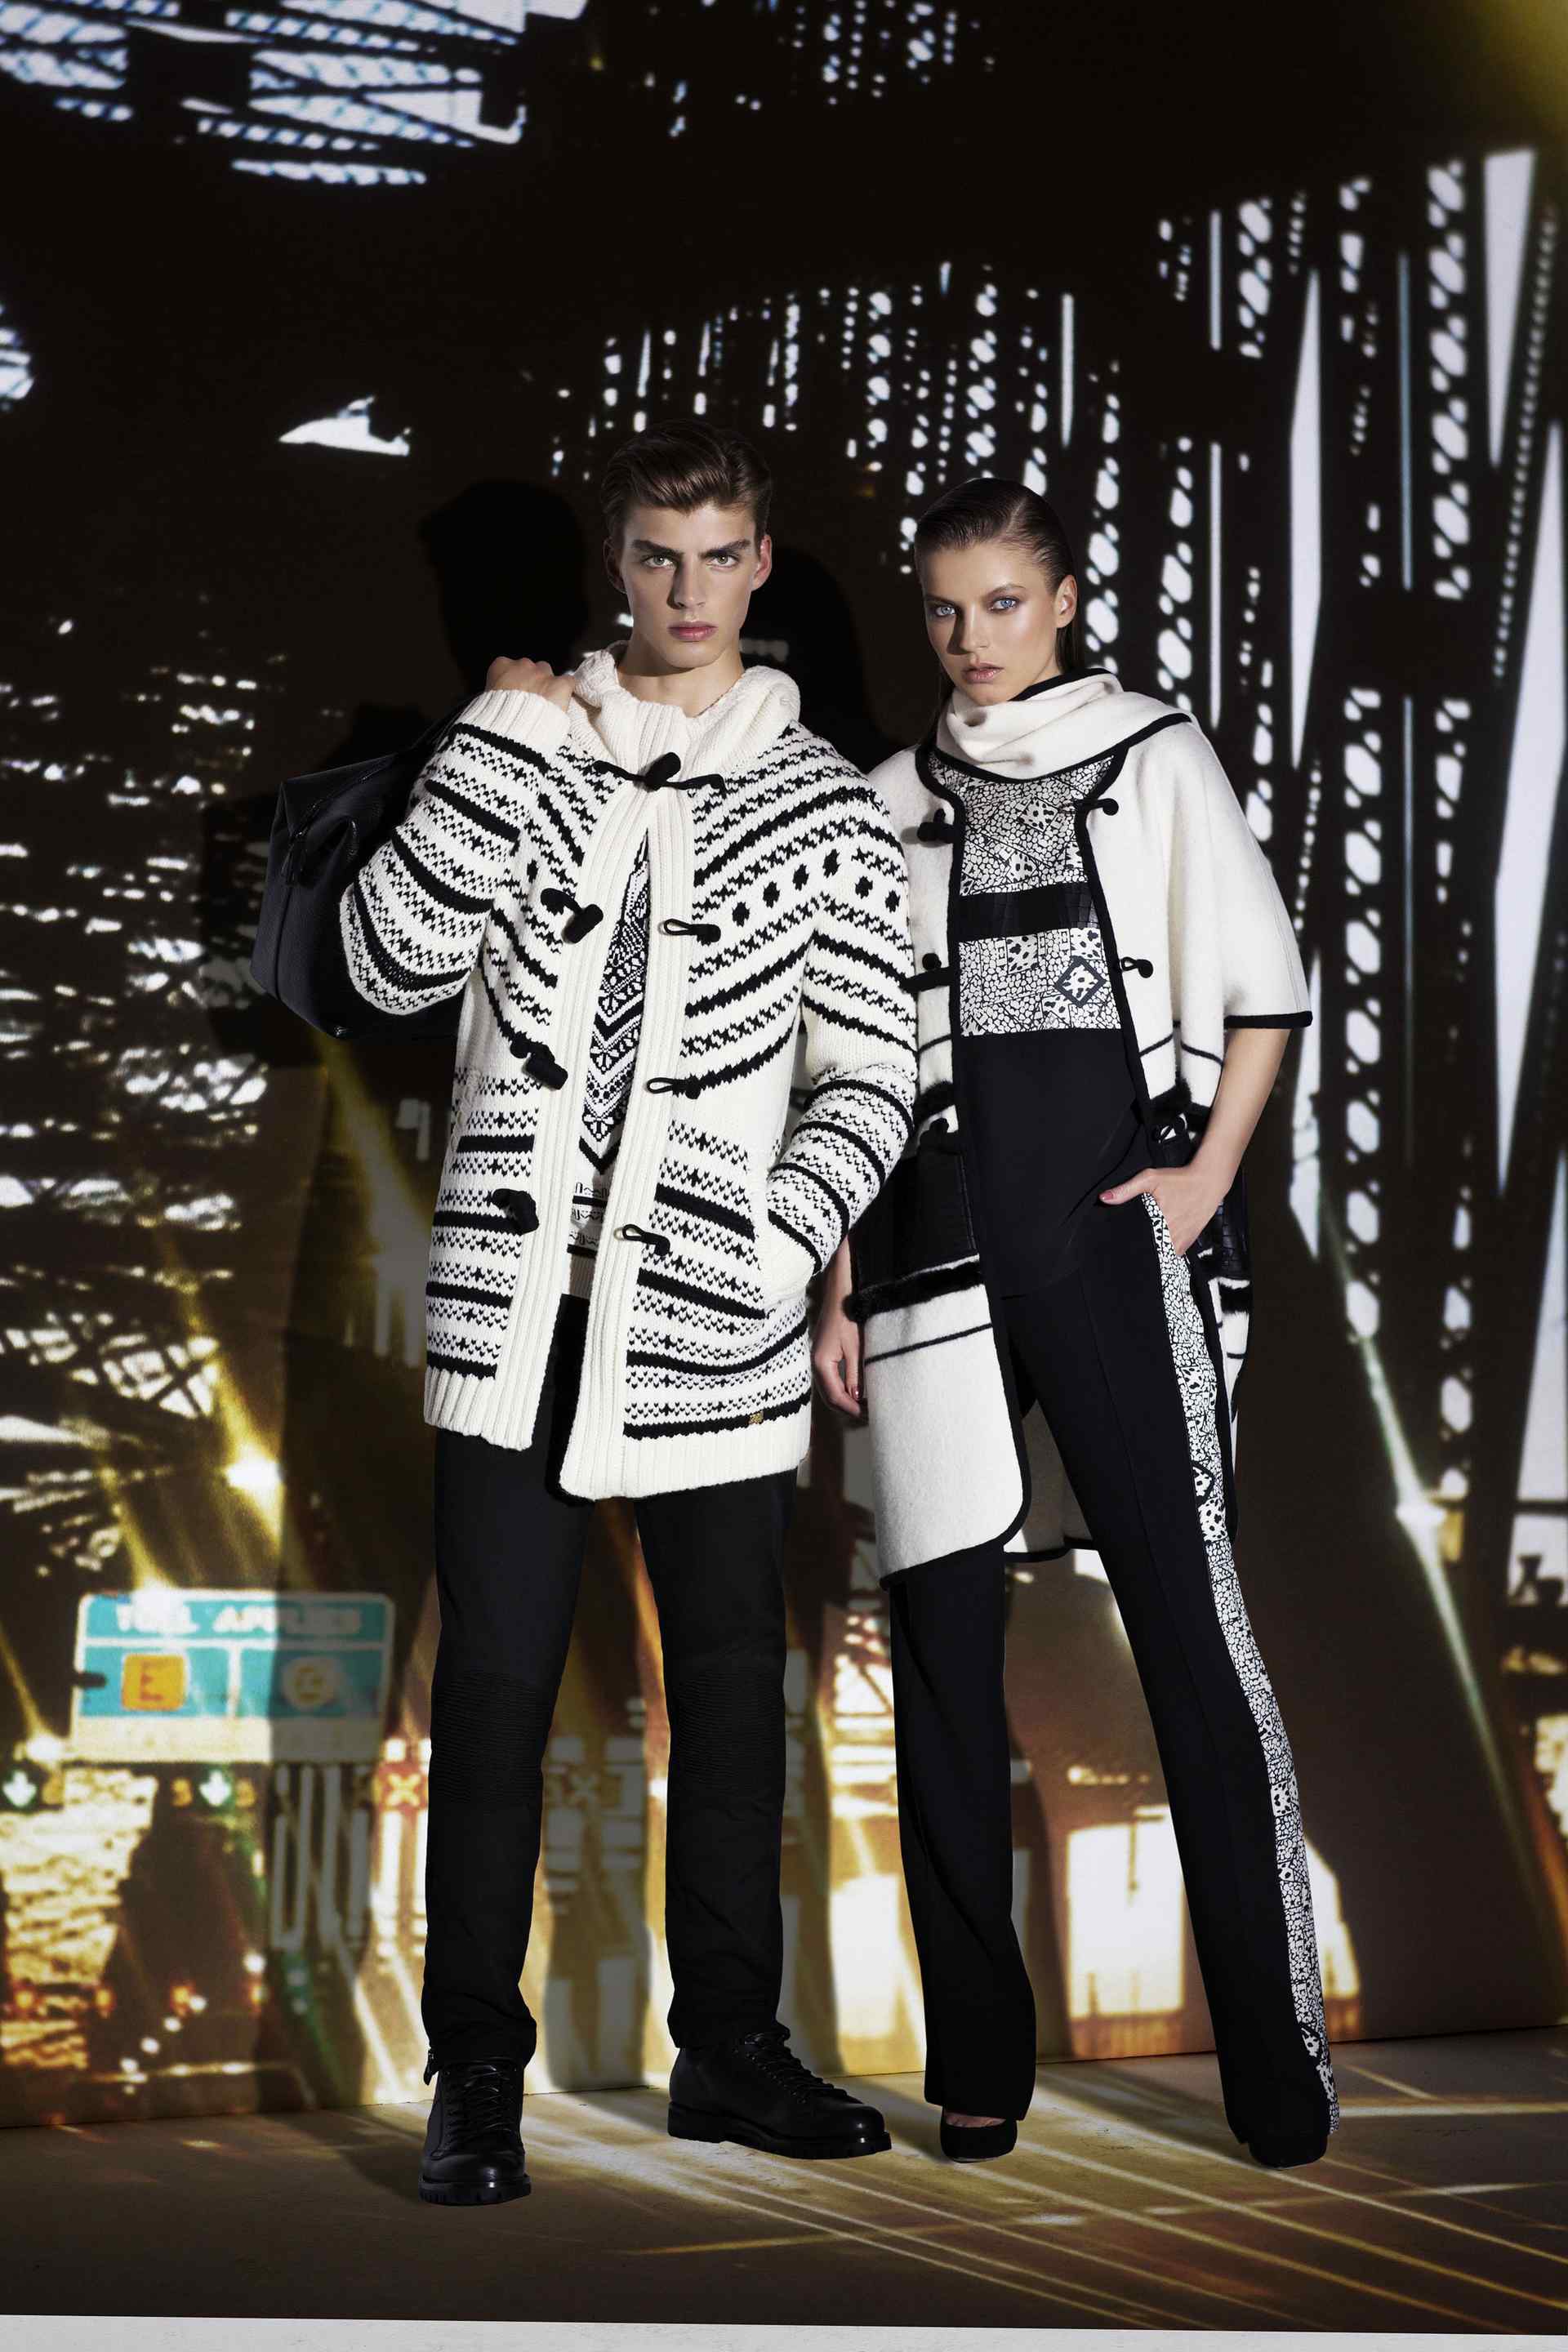 Roberto Cavalli Class Fall/Winter 2015 Campaign Highlights Choice Knitwear